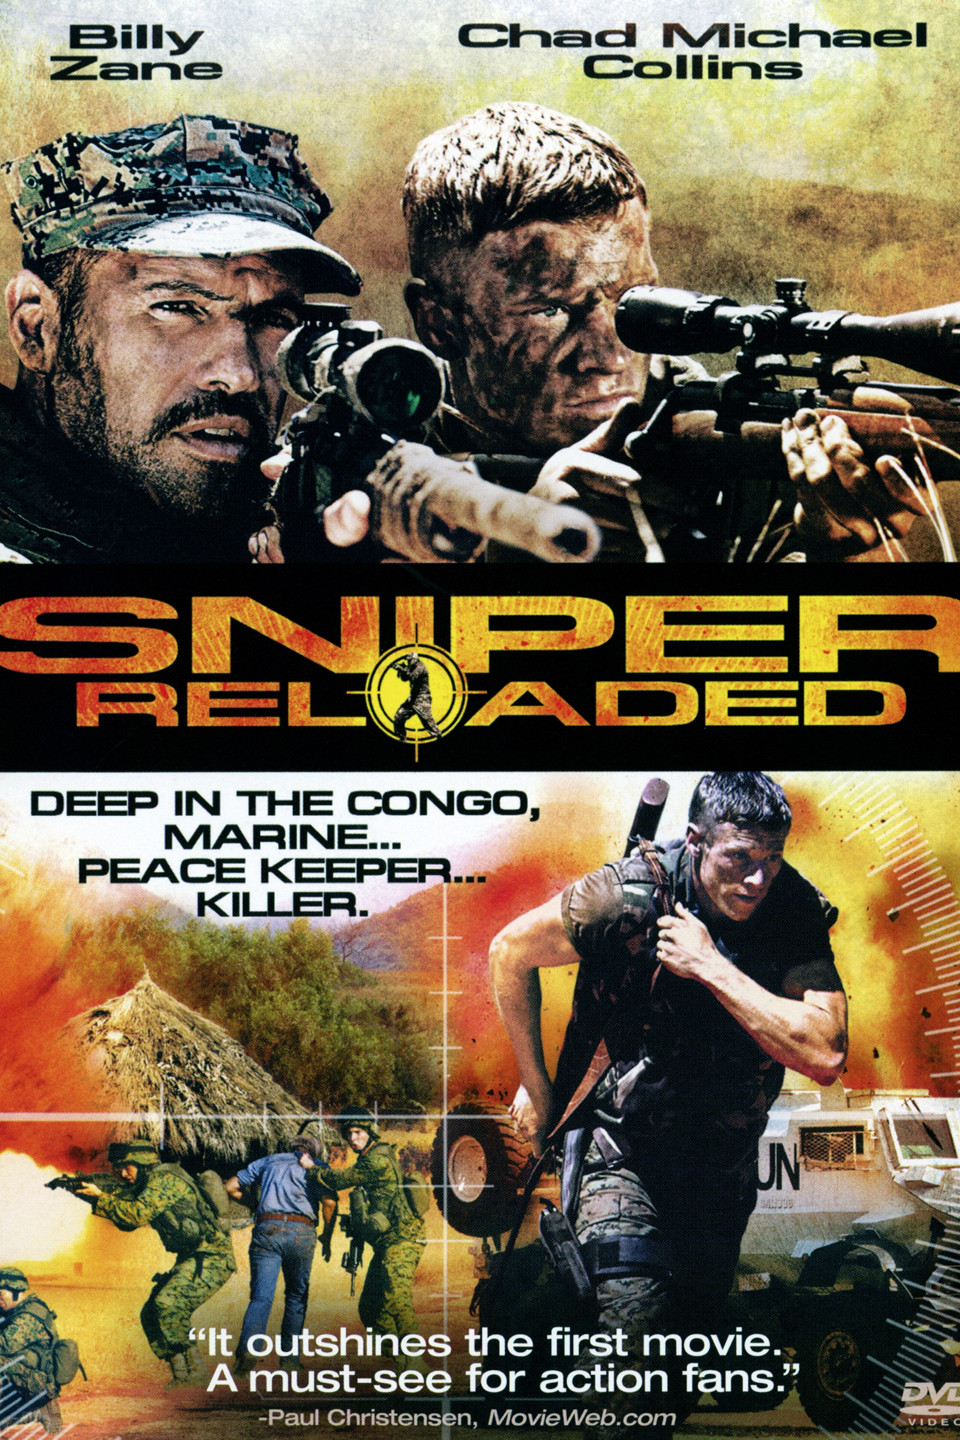 [MINI-HD] Sniper : Reloaded (2011) สไนเปอร์ 4 โคตรนักฆ่าซุ่มสังหาร [พากย์ไทย 5.1 + เสียงอังกฤษ DTS] [บรรยายไทย + อังกฤษ] [เสียงไทย + ซับไทย] [OPENLOAD]